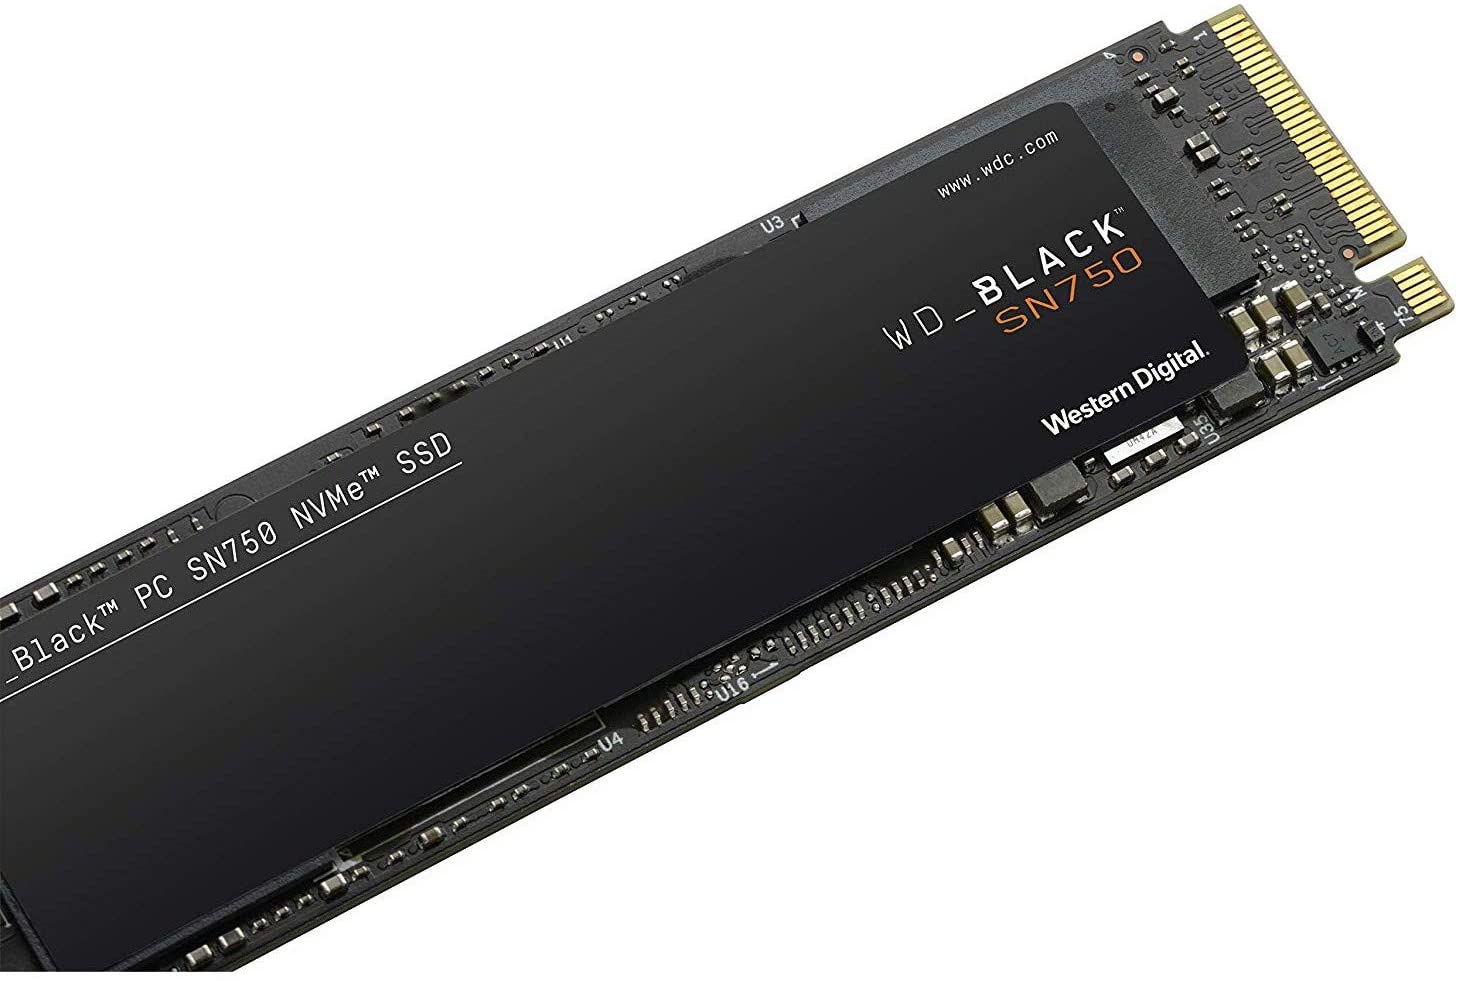 Western Digital Noir SN750 250 Go NVMe SSD